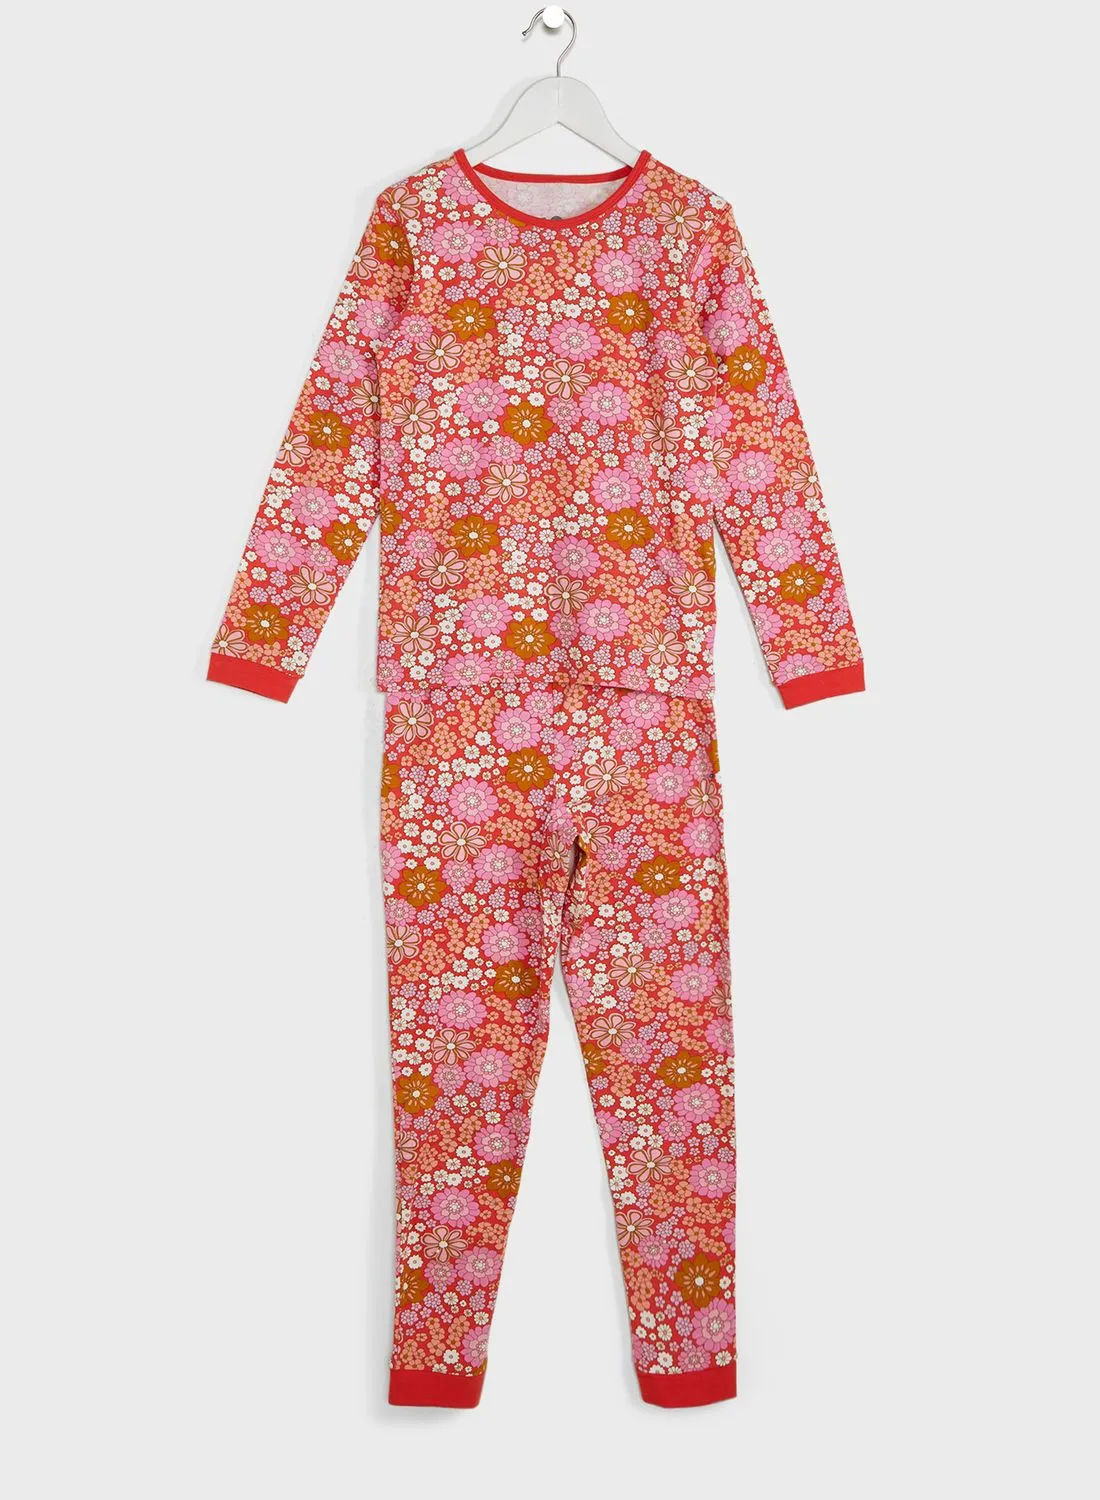 Cotton On Kids Printed T-Shirt + Pyjama Set